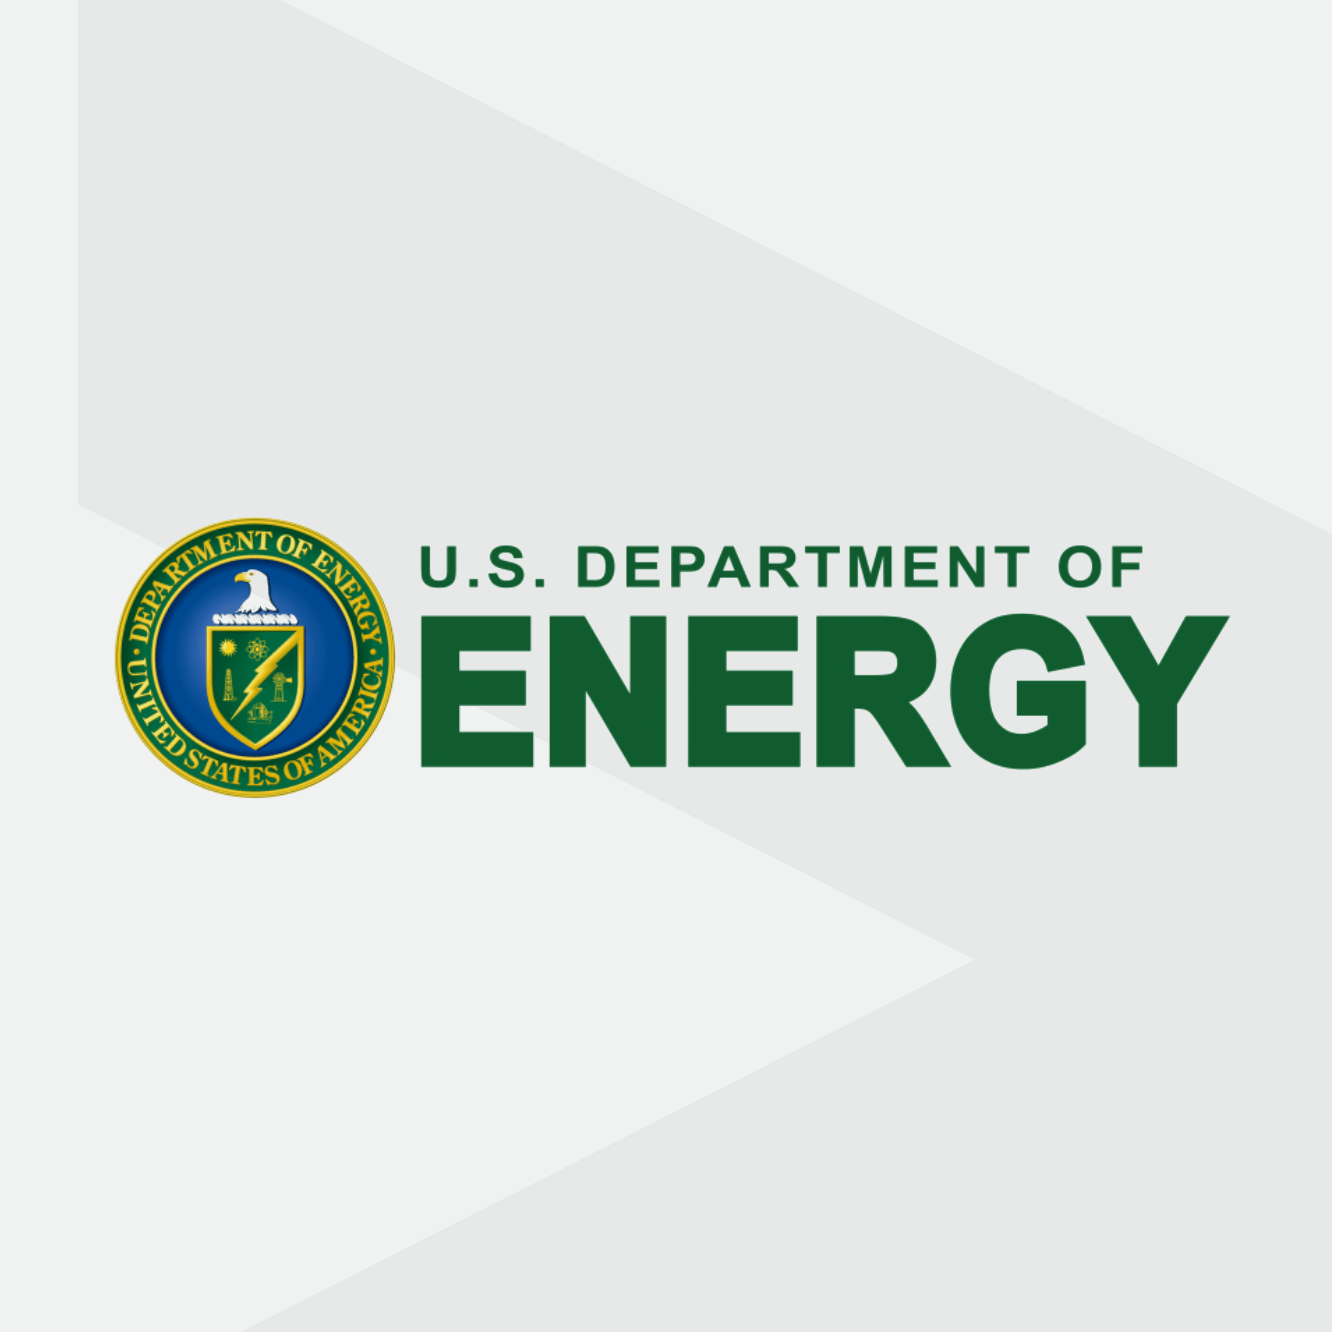 U.S. Department of Energy case study